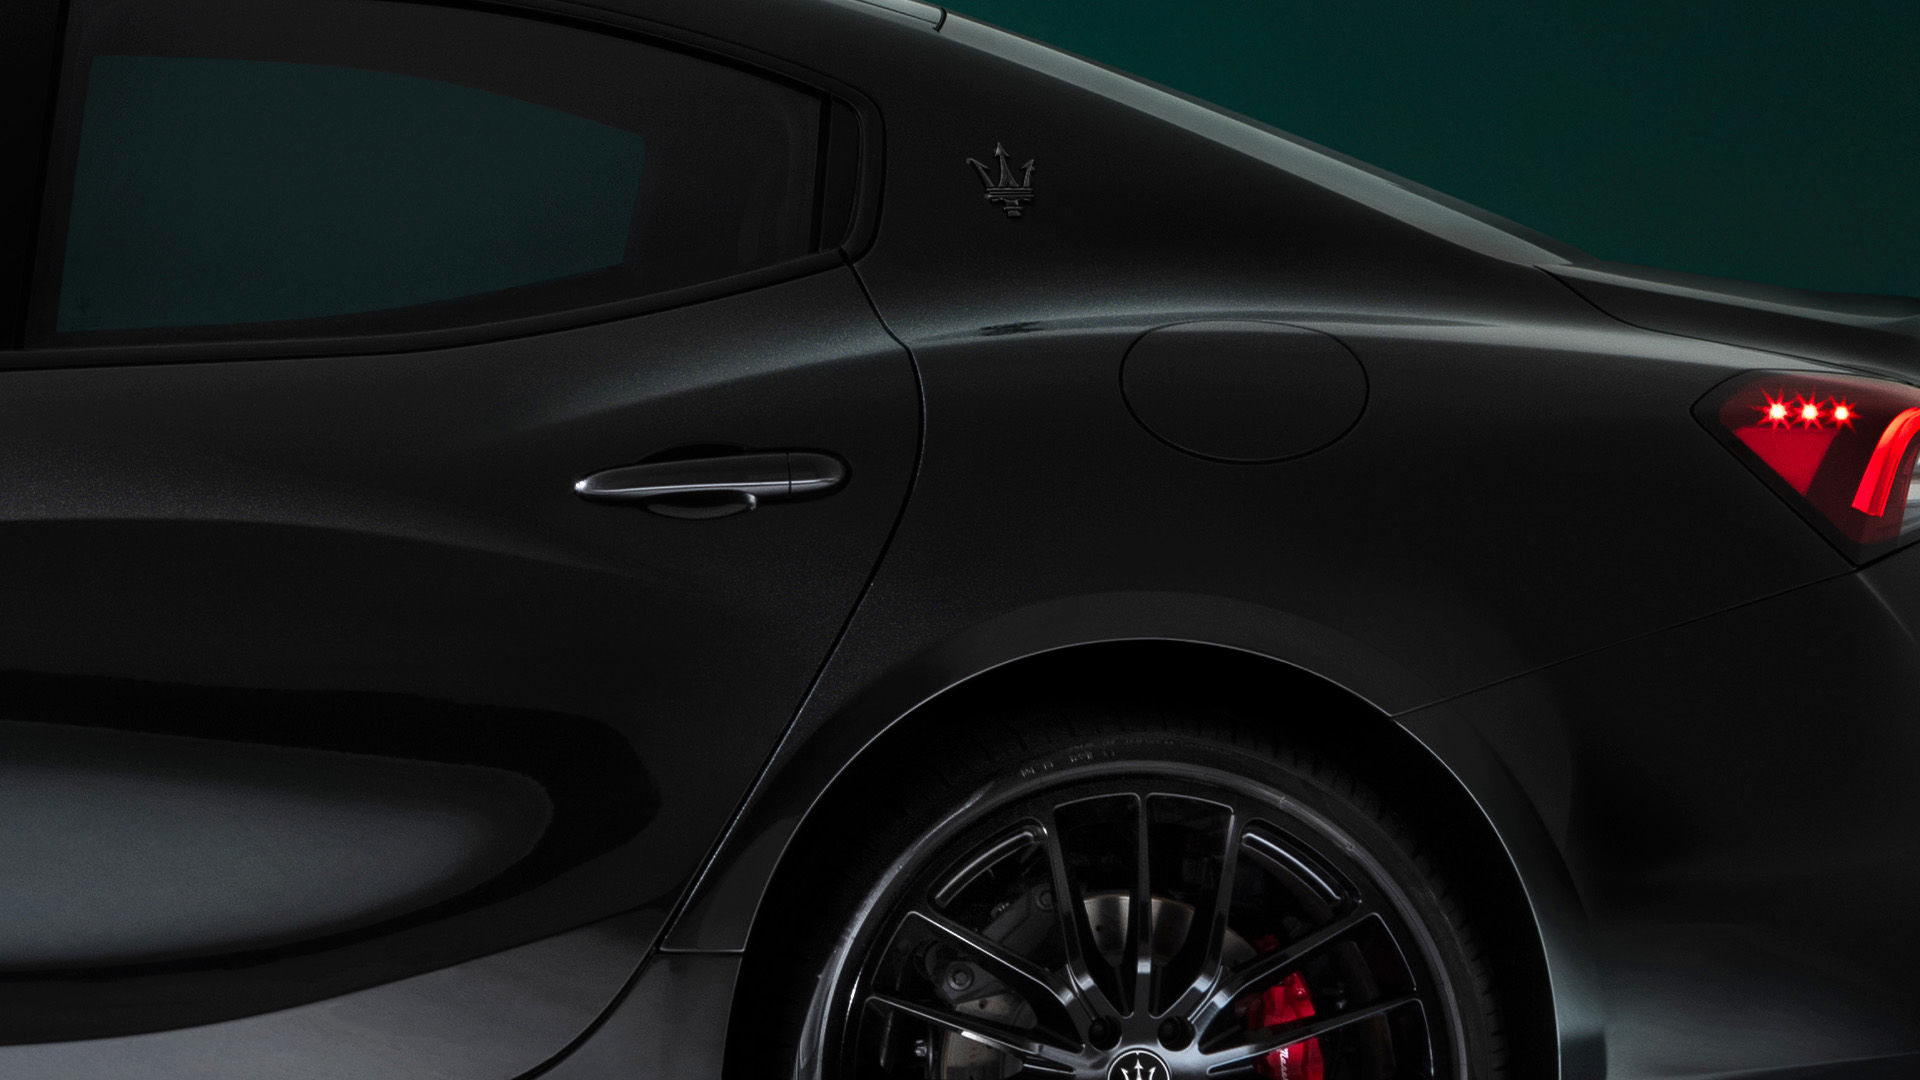 Detalle de la puerta, logo Maserati y borde Ghibli